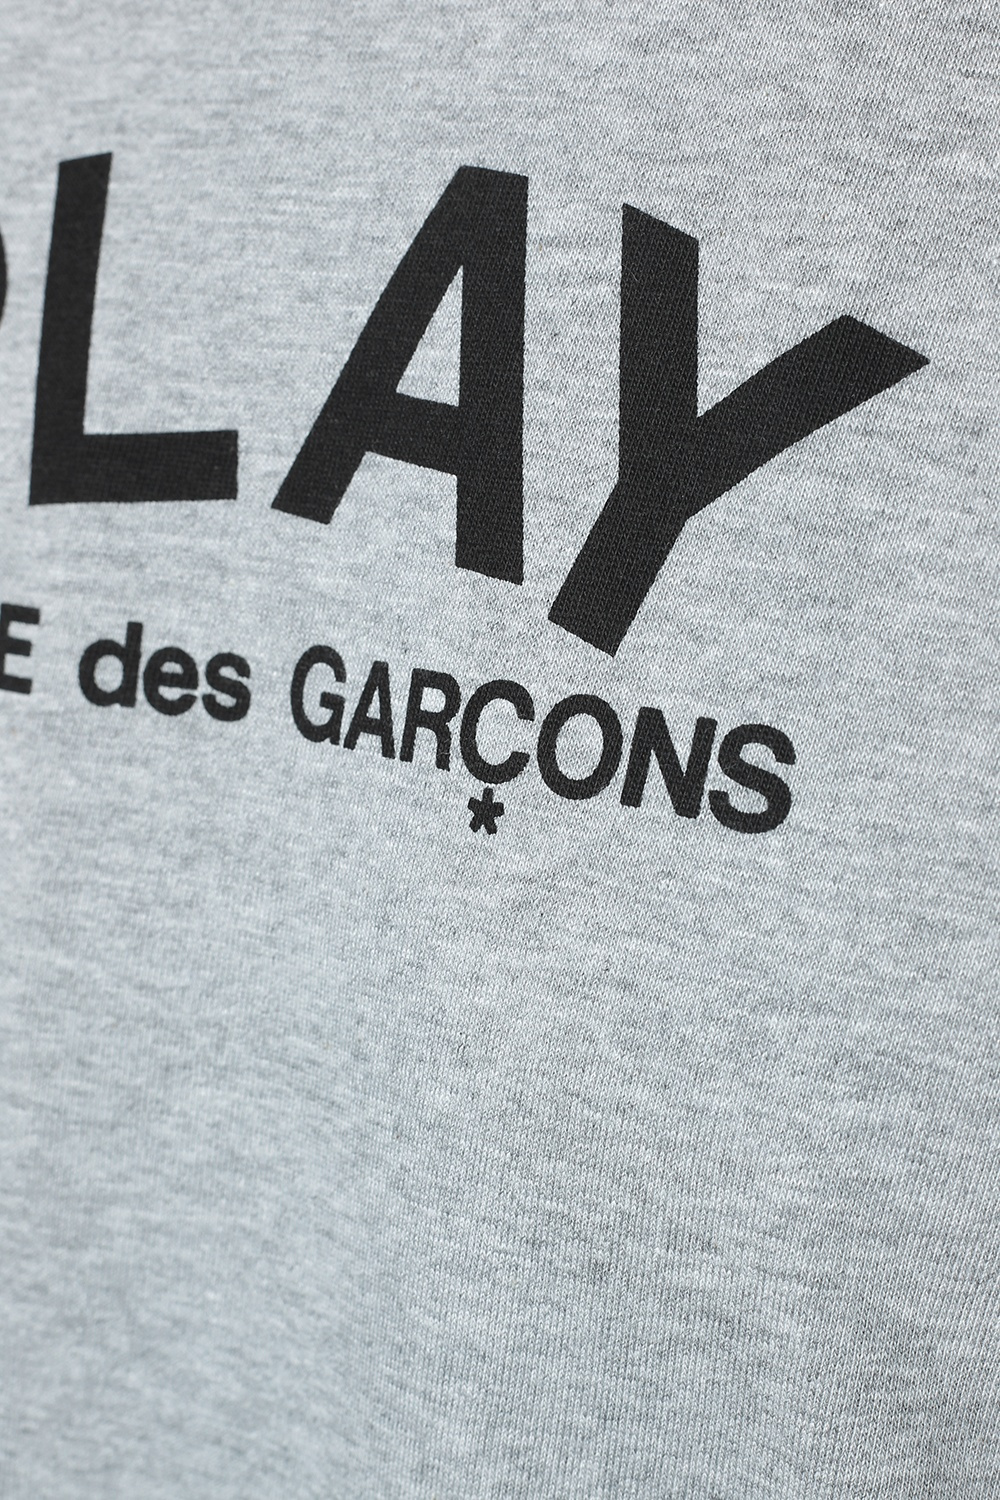 Comme des Garçons Play Printed T-shirt